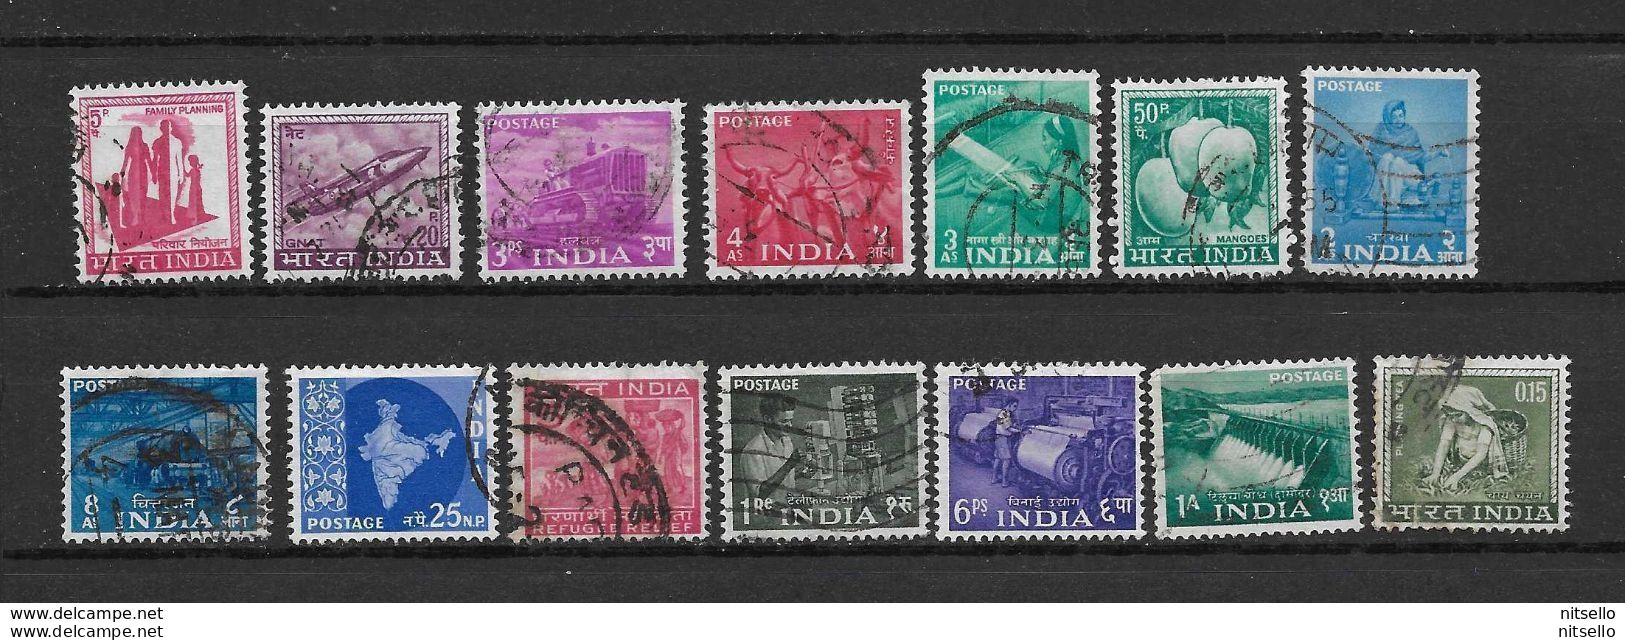 LOTE 1697  ///   INDIA                  ¡¡¡¡ LIQUIDATION !!!!!!! - Used Stamps